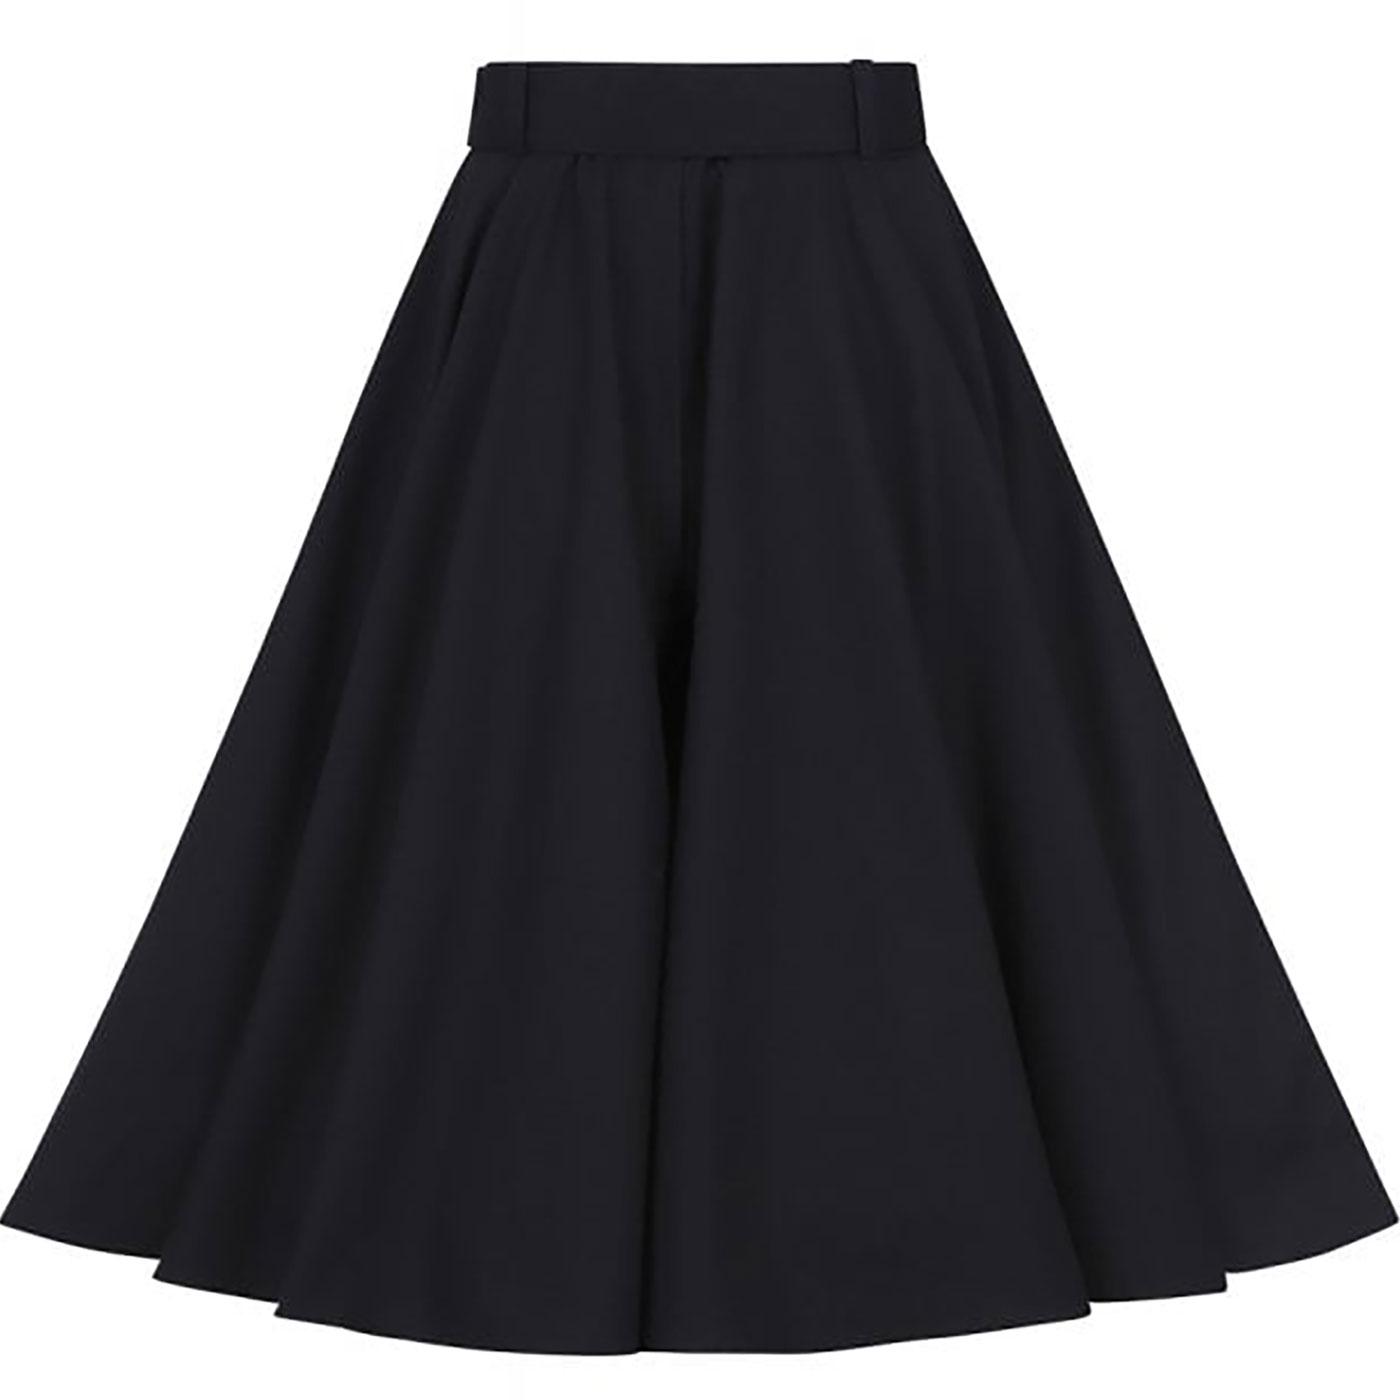 COLLECTIF 'Kitty Cat' Retro 50's Vintage Swing Skirt Black